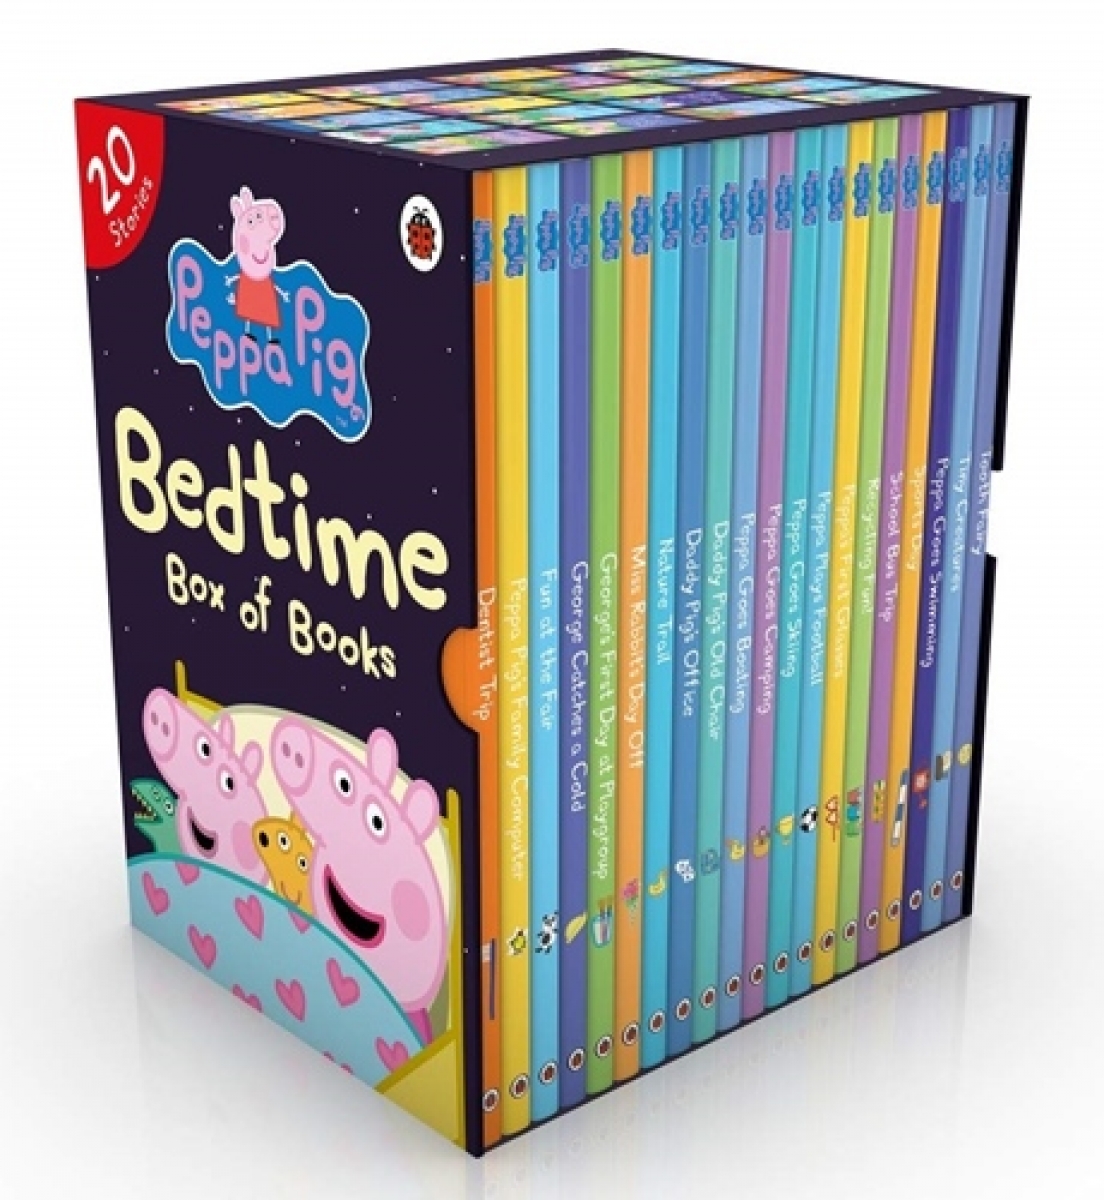 Peppa Pig: Bedtime Box of Books 